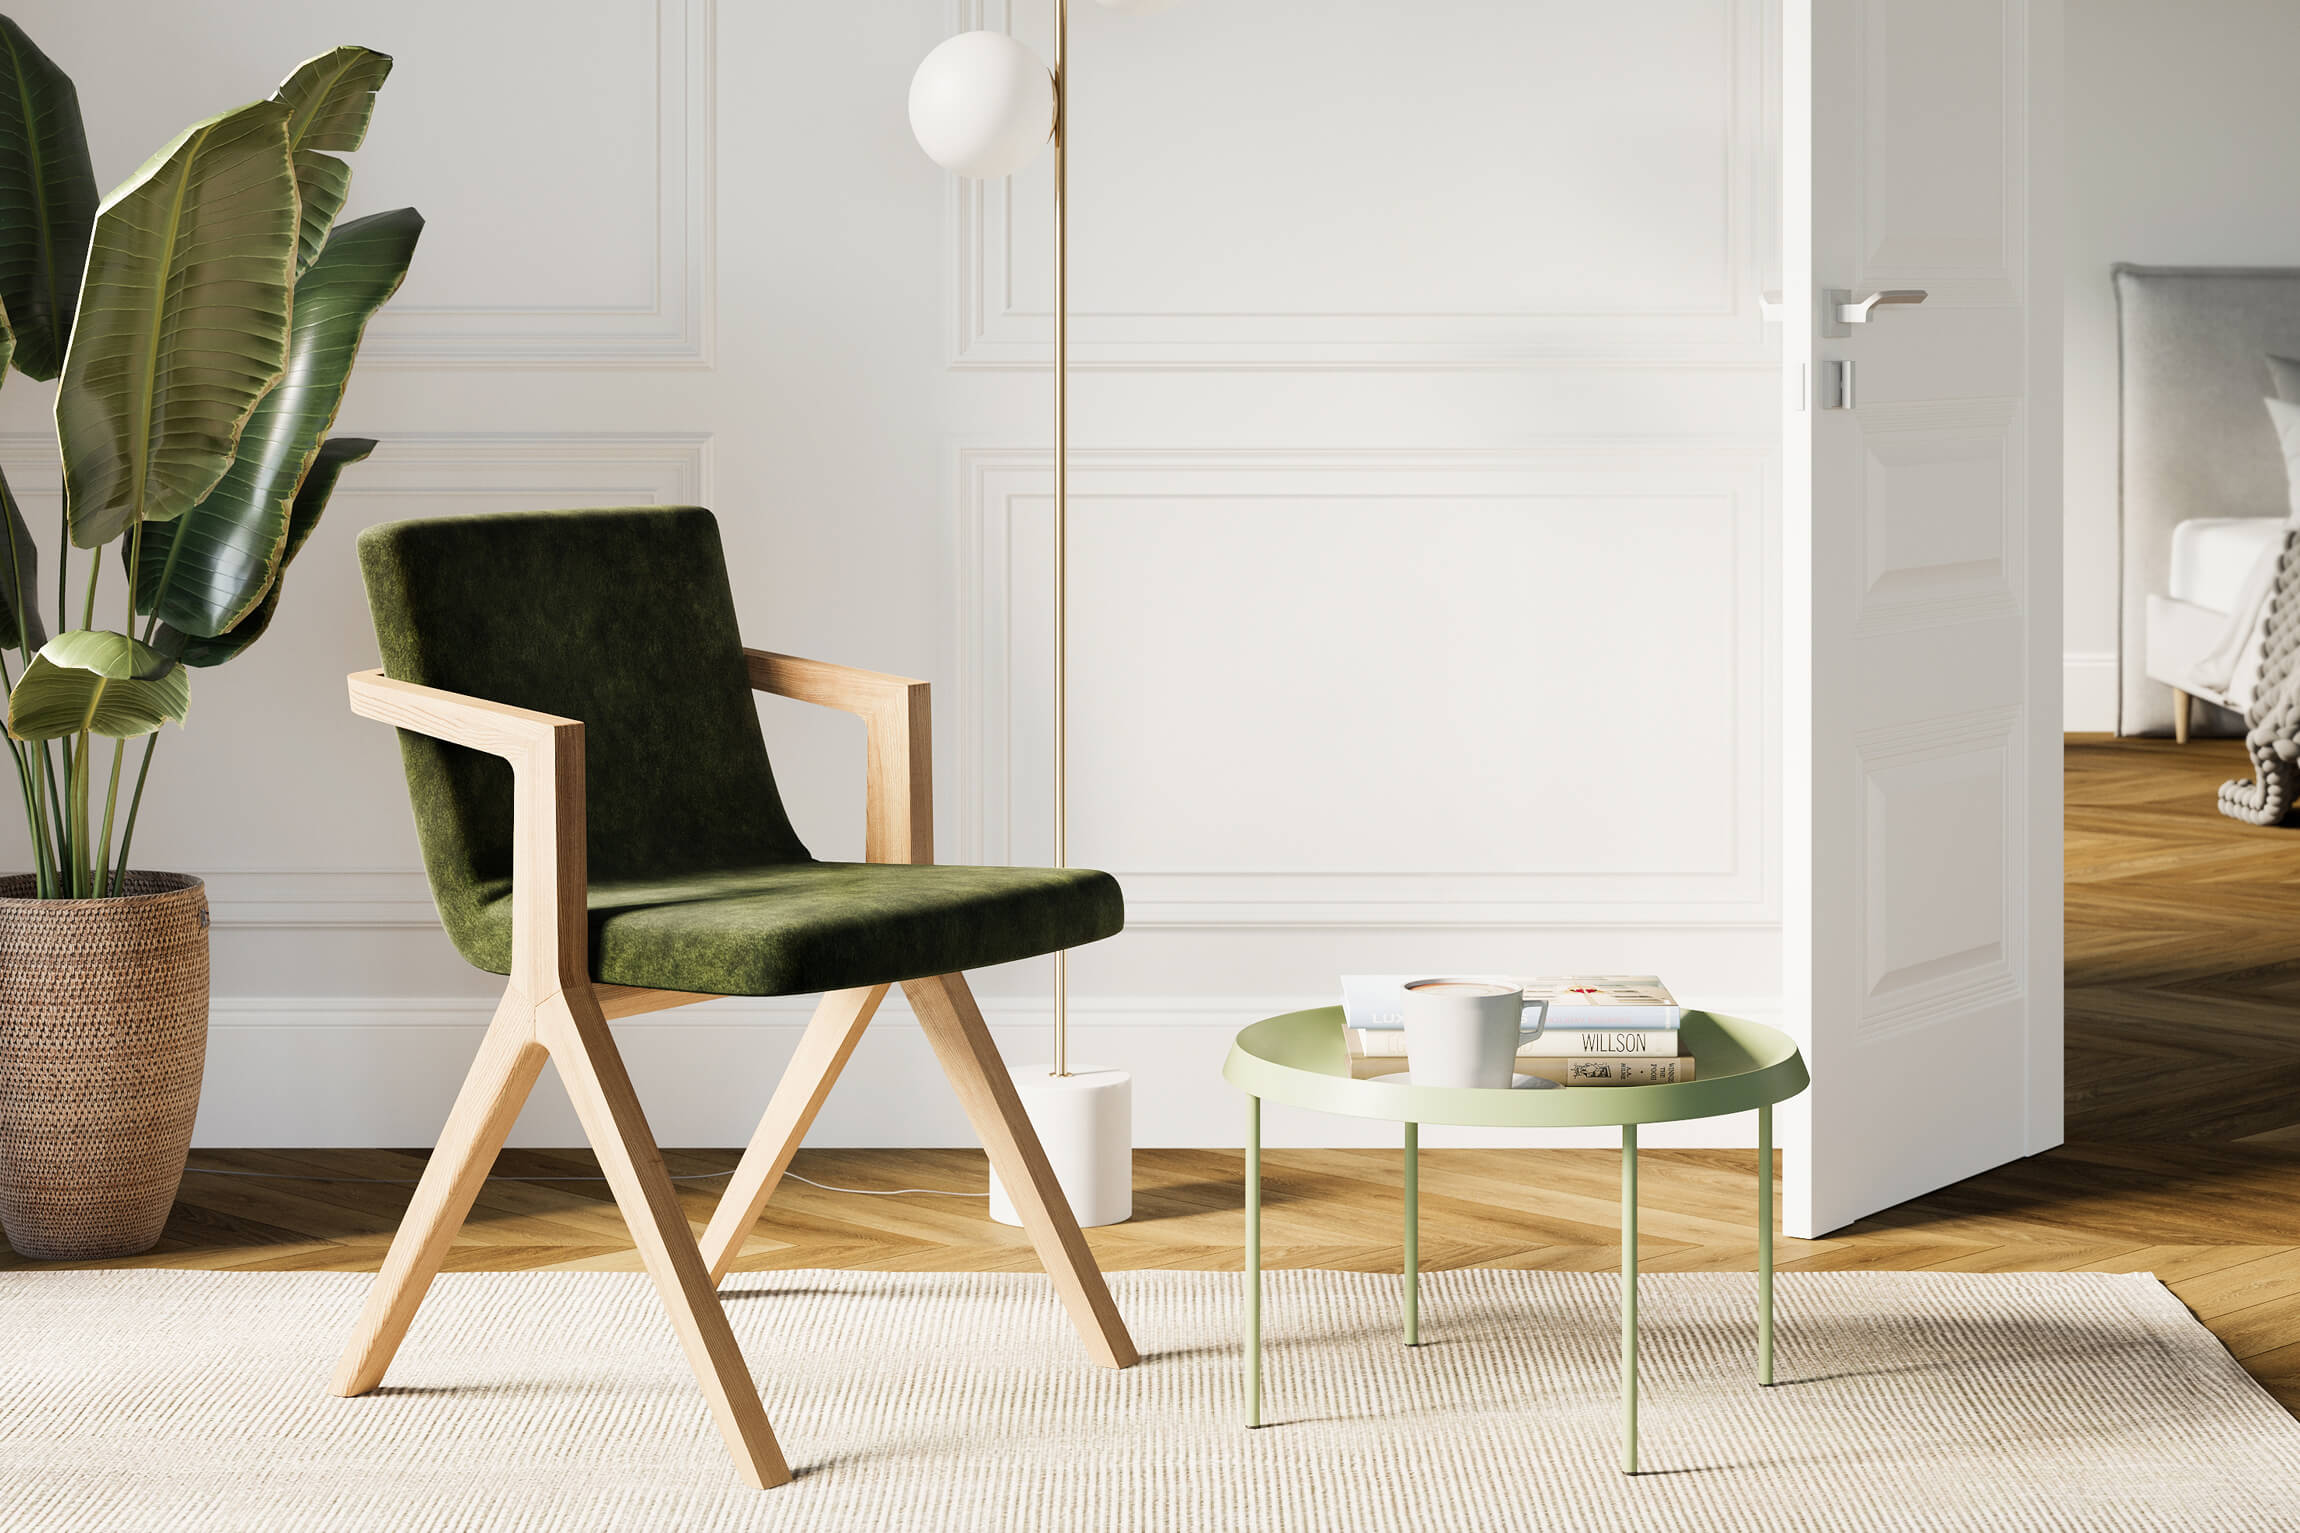 Lifestyle 3D Rendering of Elegant Green Chair